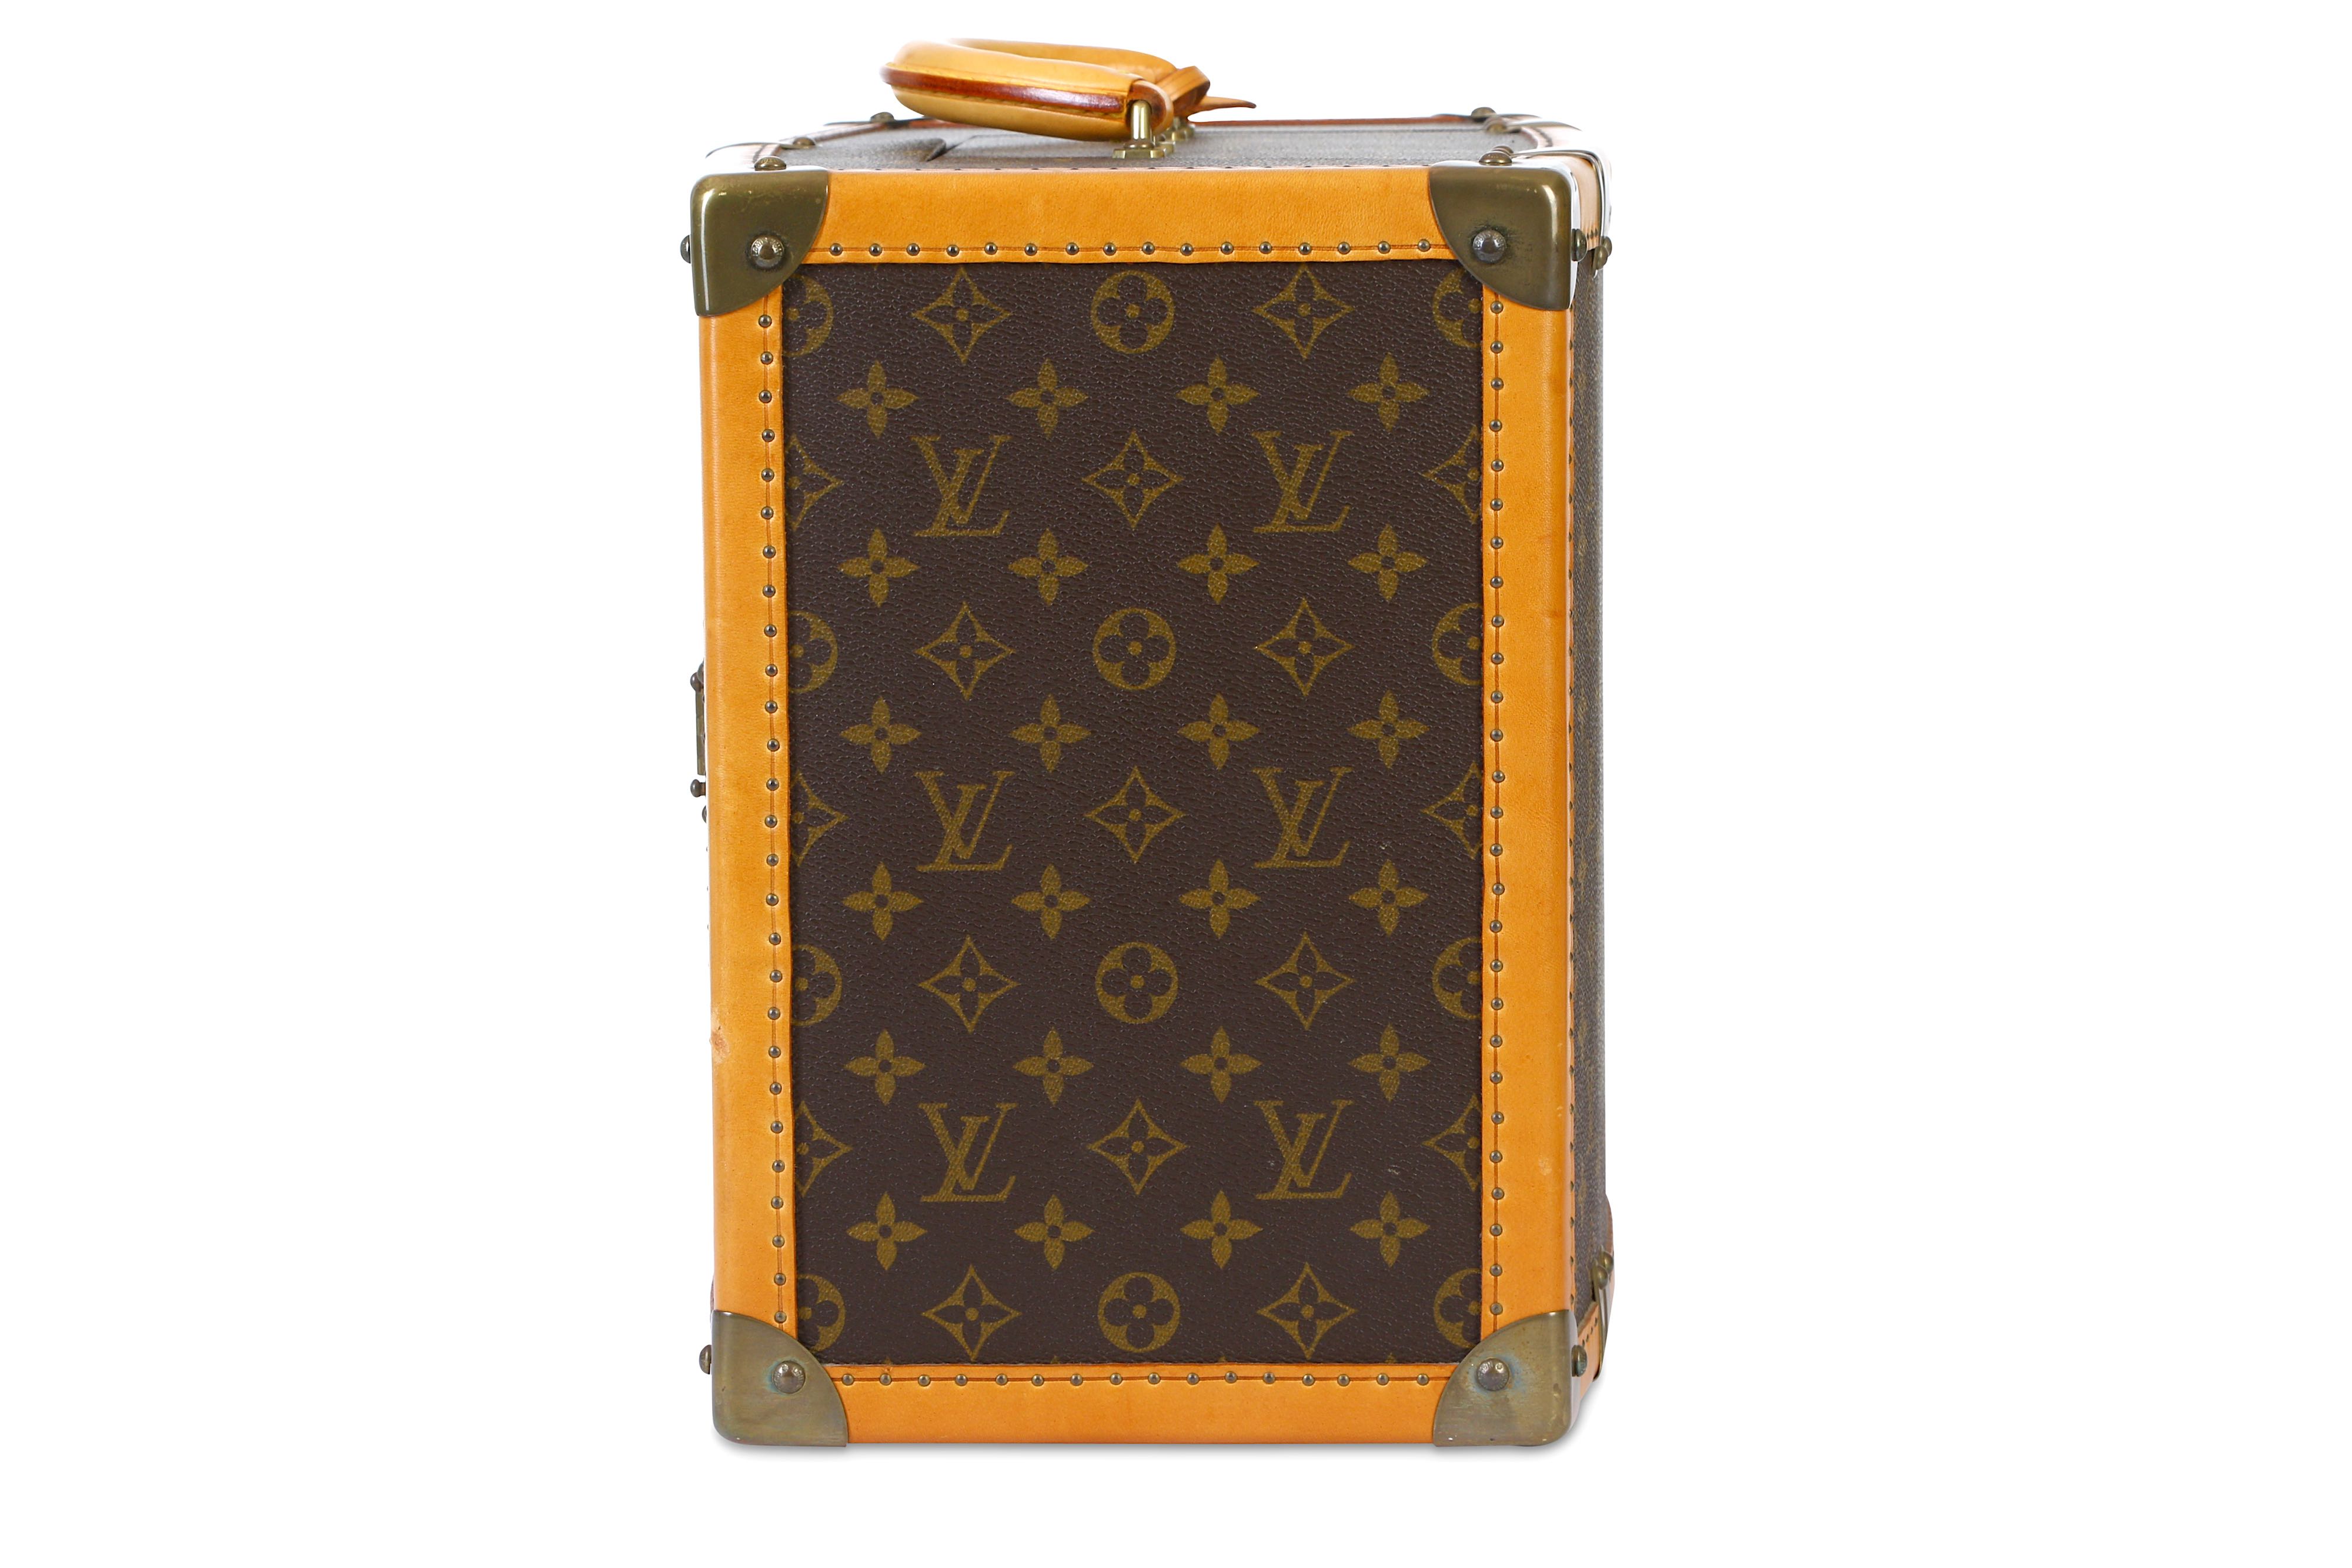 Louis Vuitton Monogram Sharon Stone x Amfar Vanity Case at the